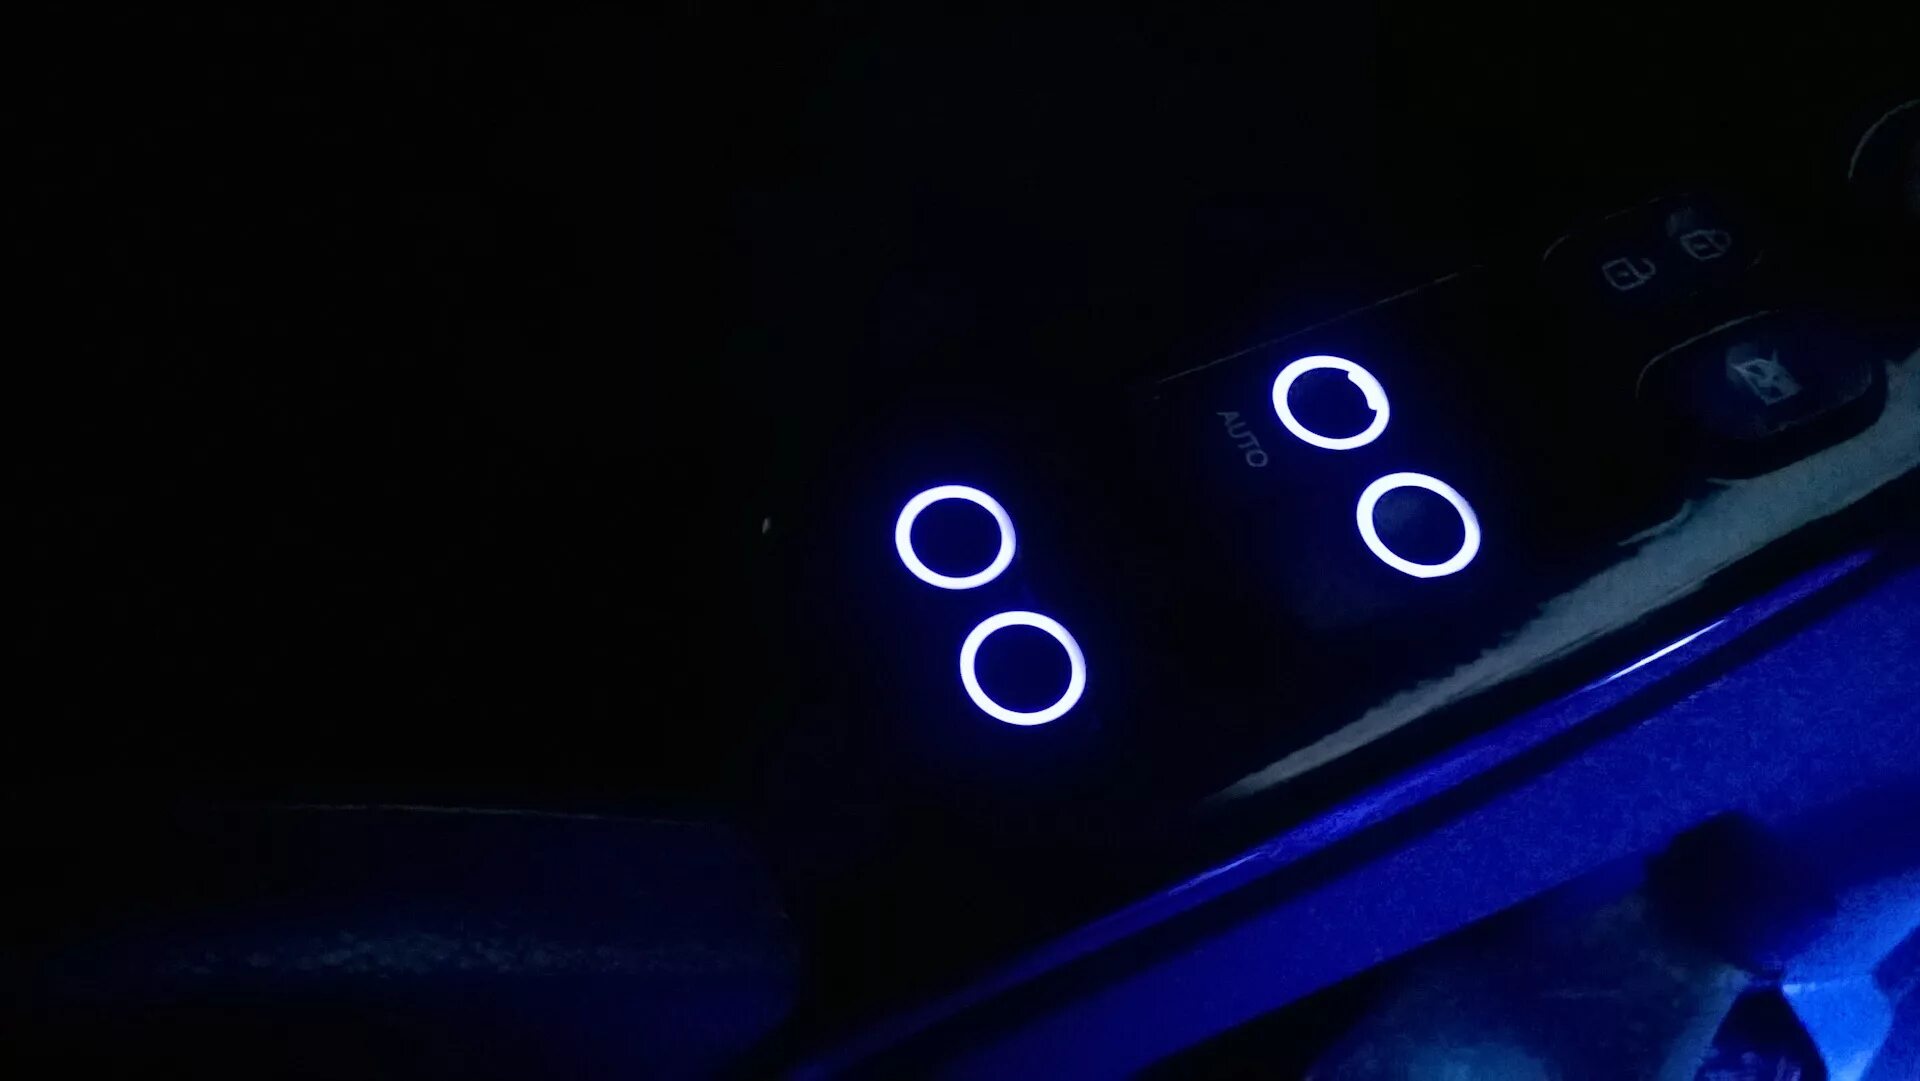 Кнопка подсветкой 22. Хендай Солярис подсветка кнопок. Подсветка Hyundai Solaris кнопки. Подсветка кнопок Солярис 1. Солярис 2012 кнопка стеклоподъемника подсветка.